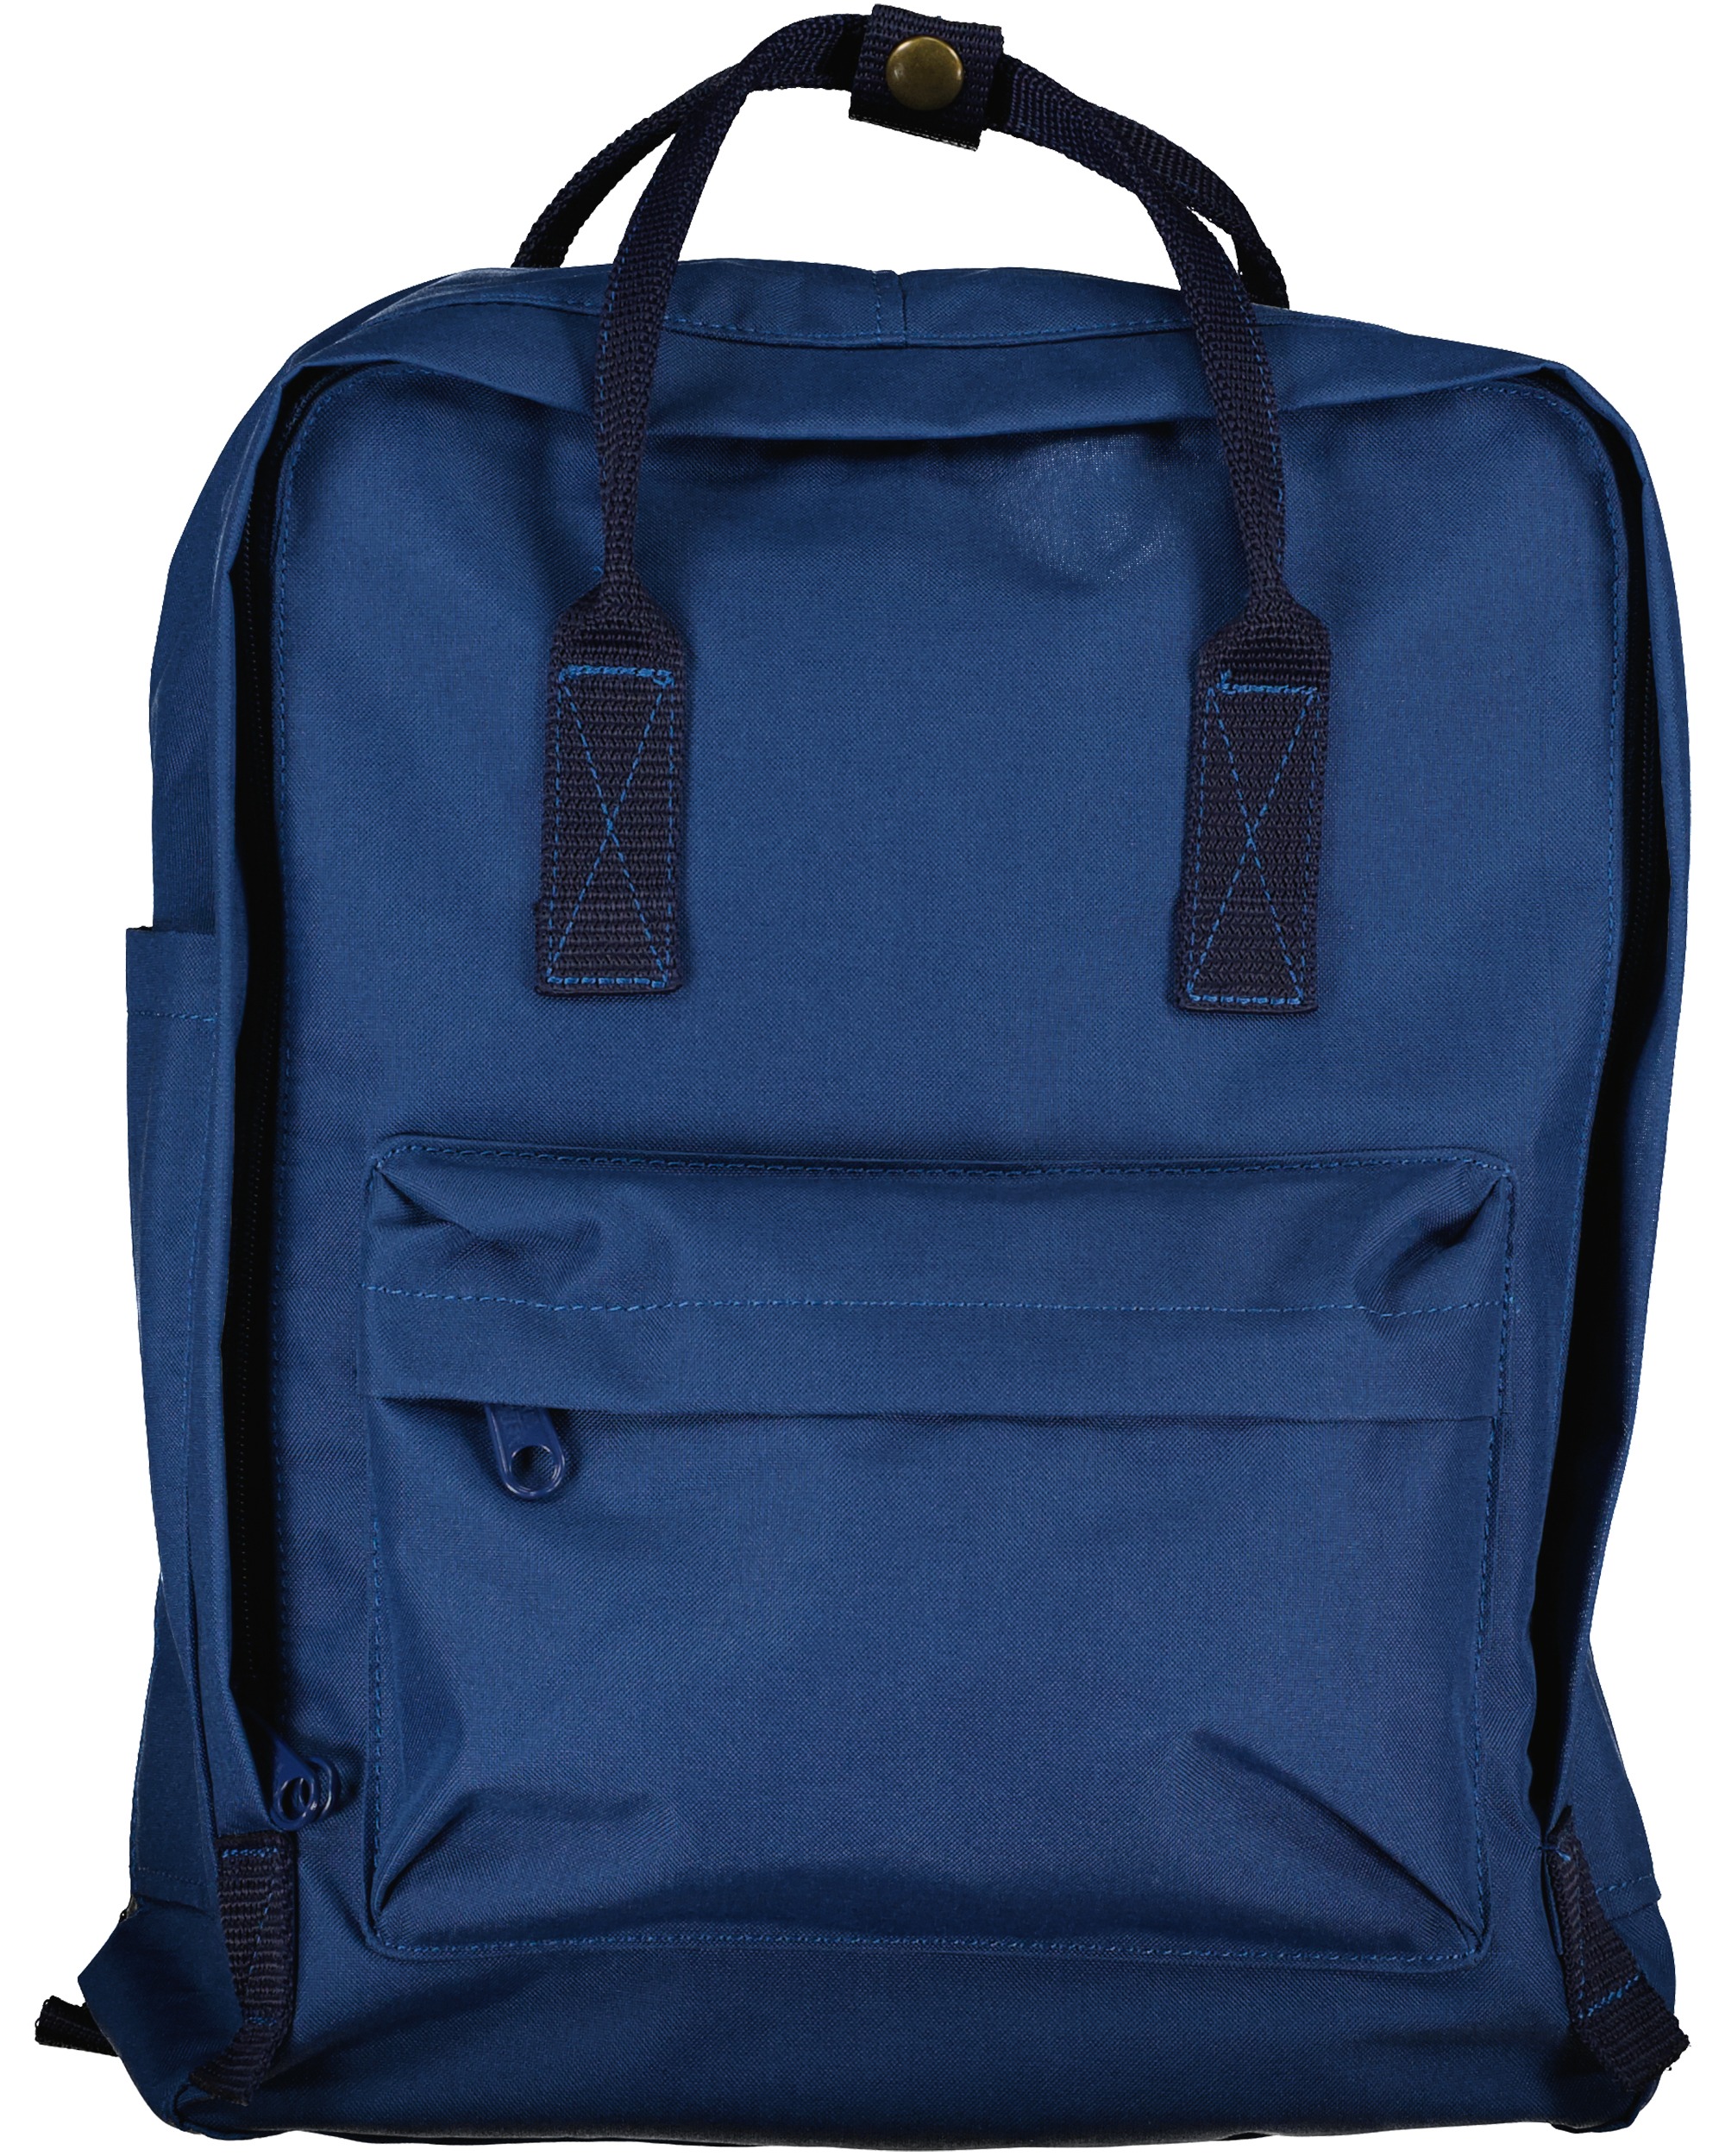 Enza® 60279 Modern Everyday Backpack